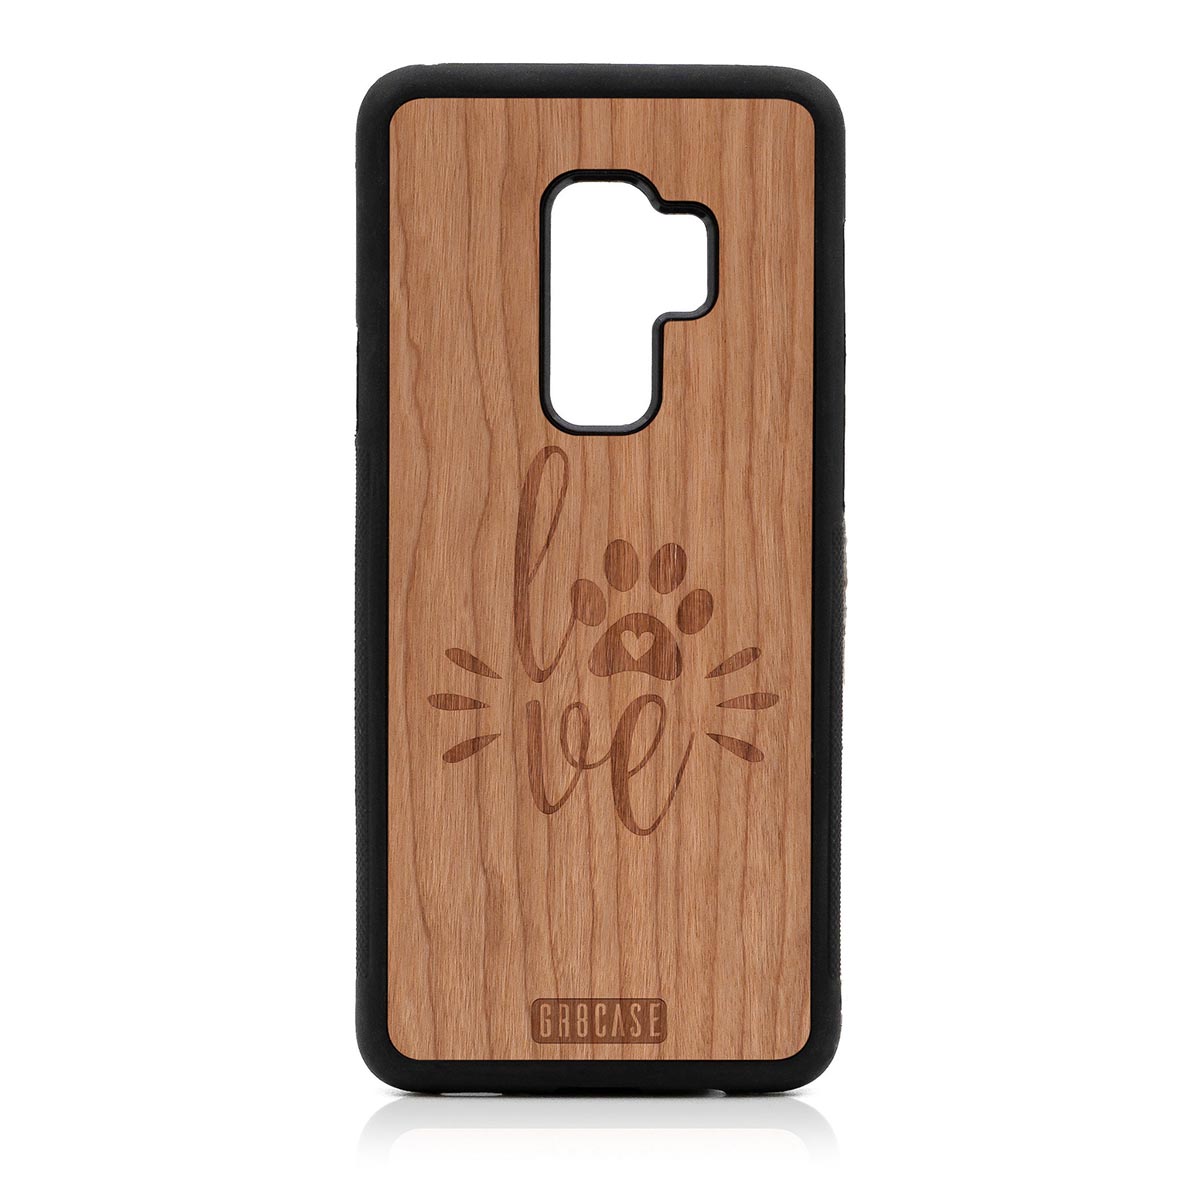 Paw Love Design Wood Case Samsung Galaxy S9 Plus by GR8CASE